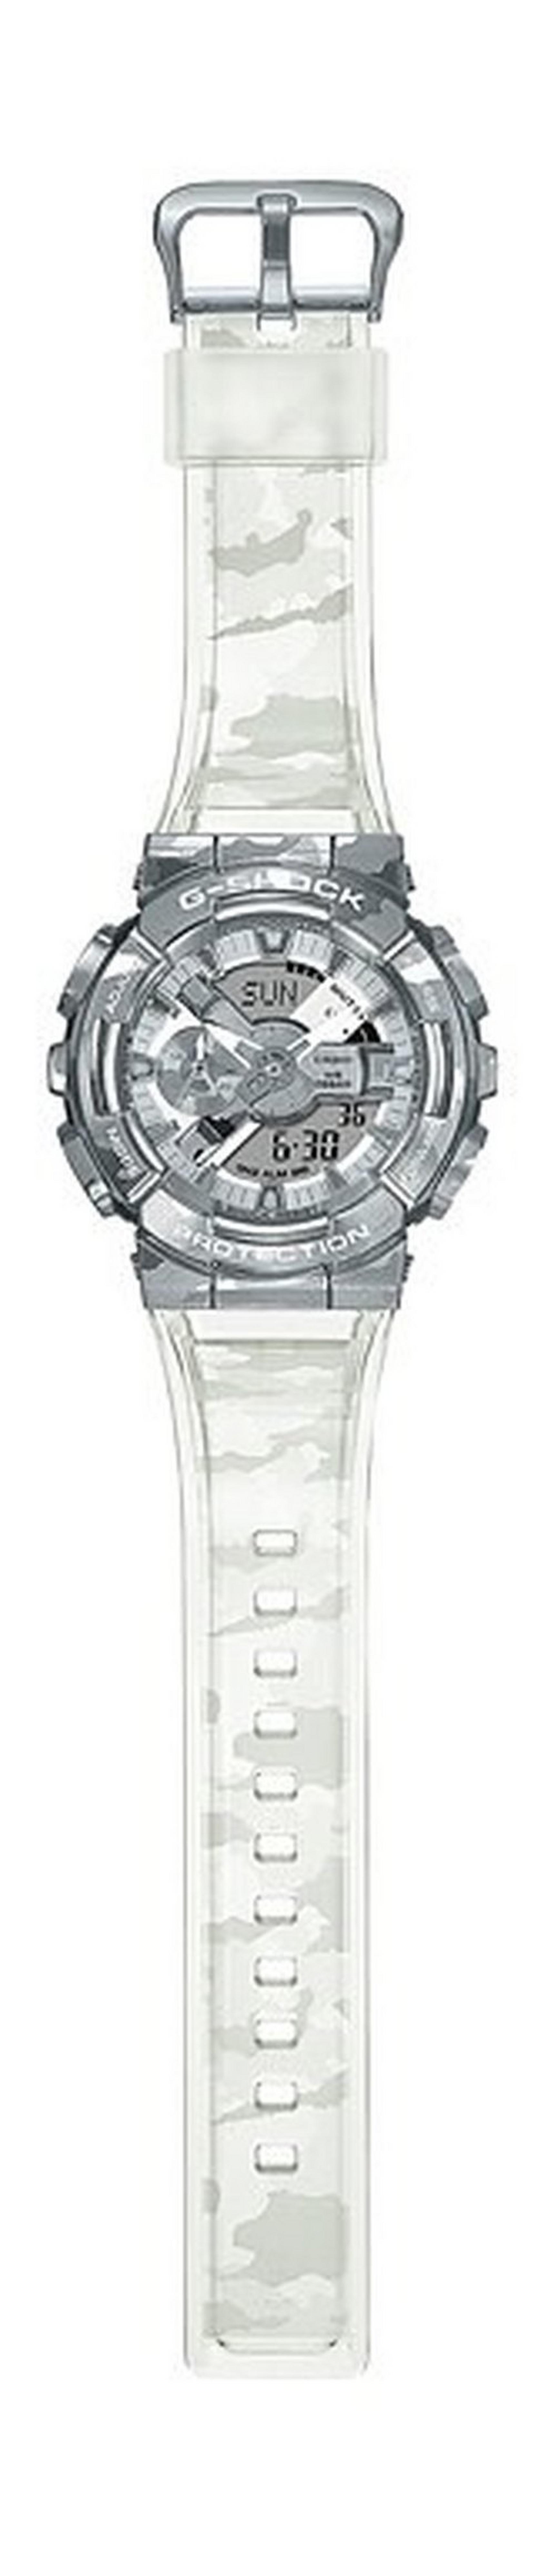 ساعة كاسيو جي شوك كاجوال-للرجال حجم 52 ملم (GM-110SCM-1ADR)